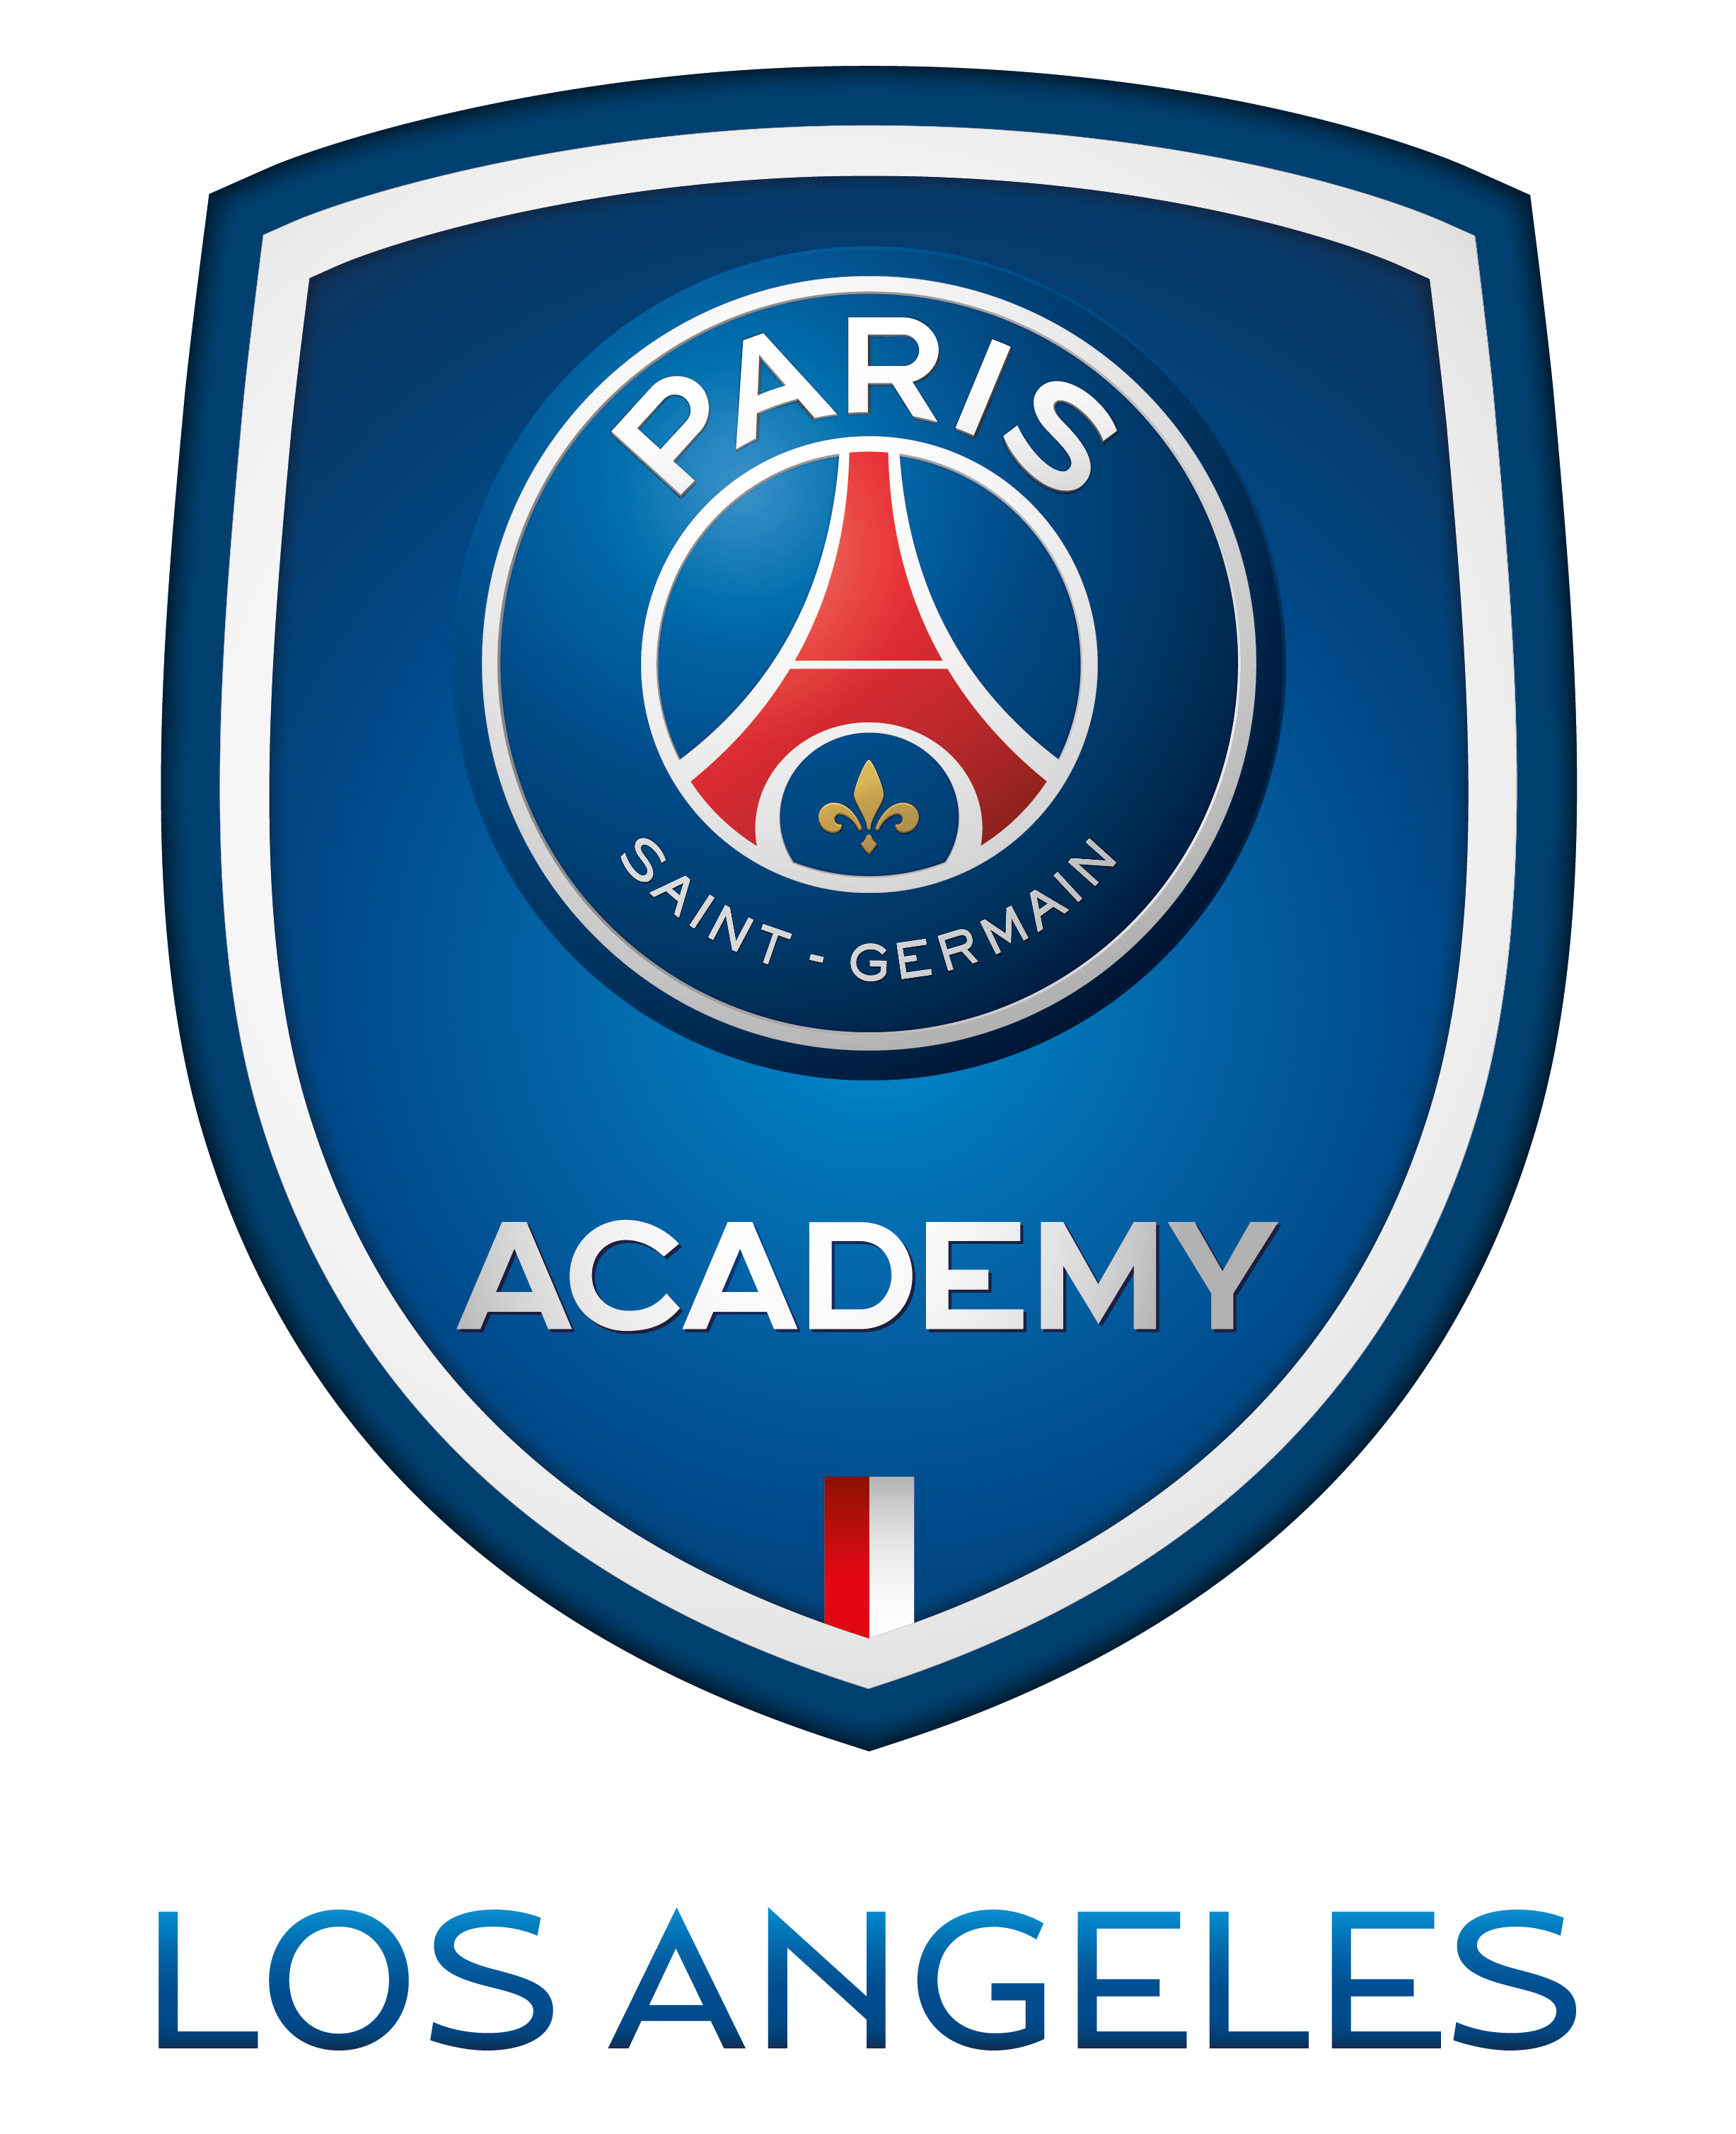 Paris Saint-Germain Academy Los Angeles Soccer Club